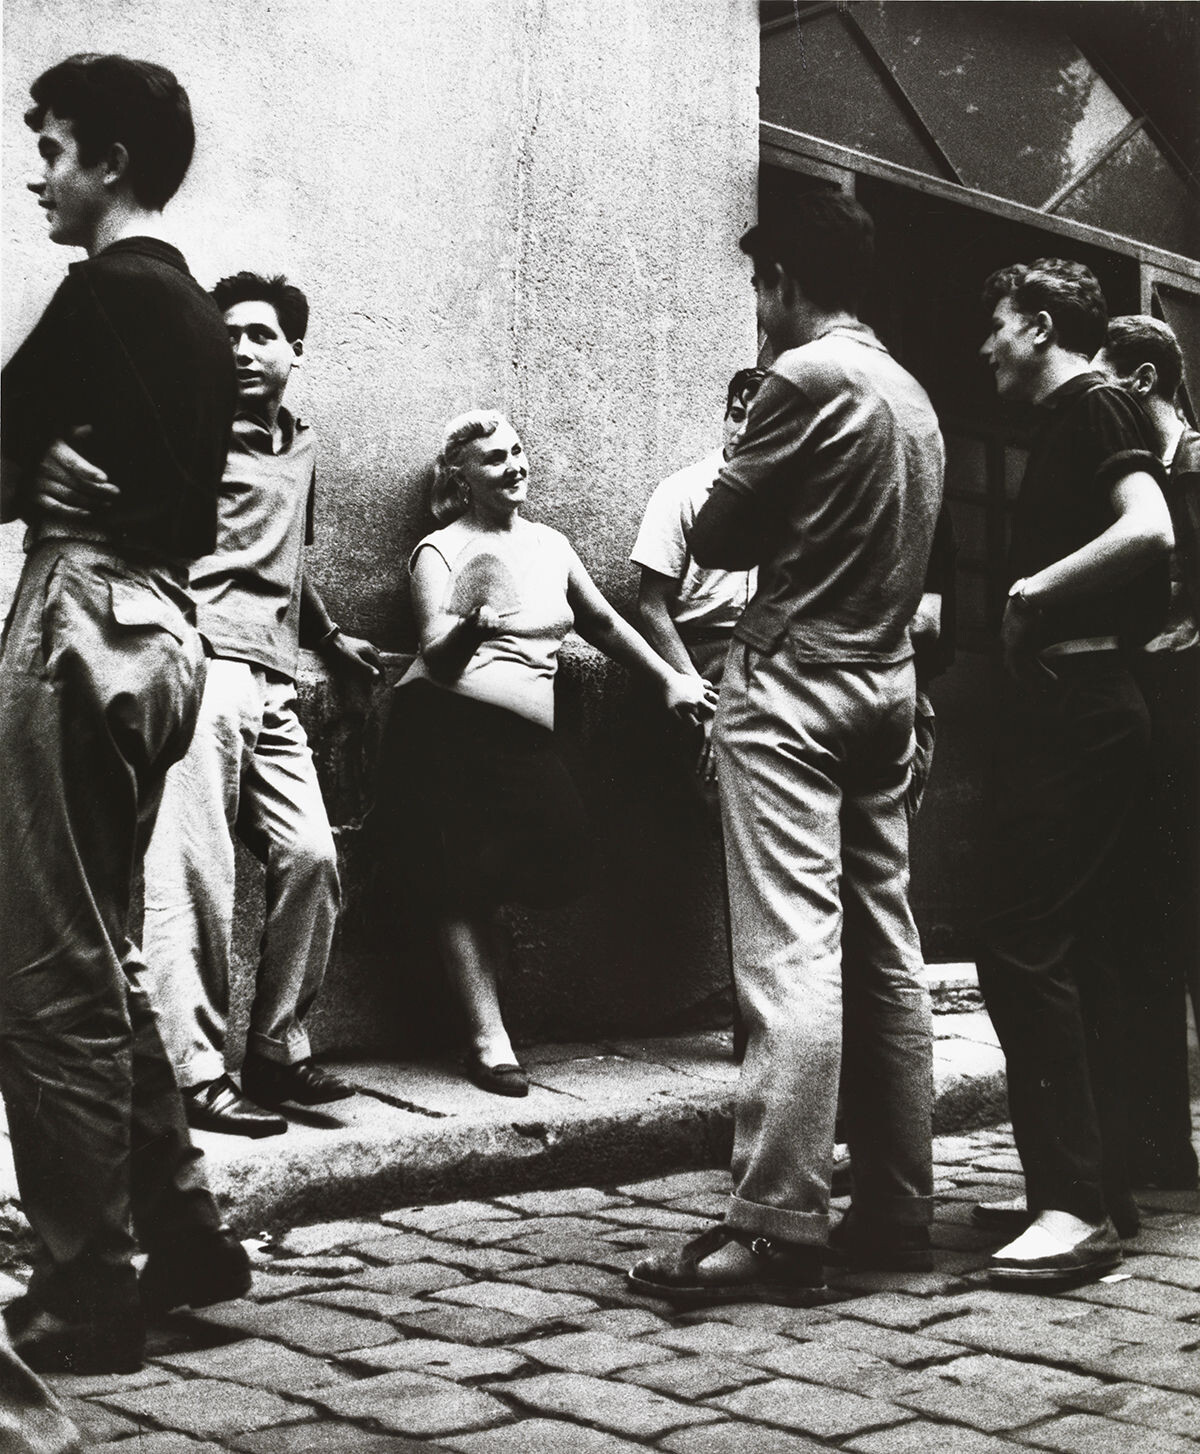 Улица, район Эль Раваль, Барселона, 1960-е. Фотограф Жоан Колом